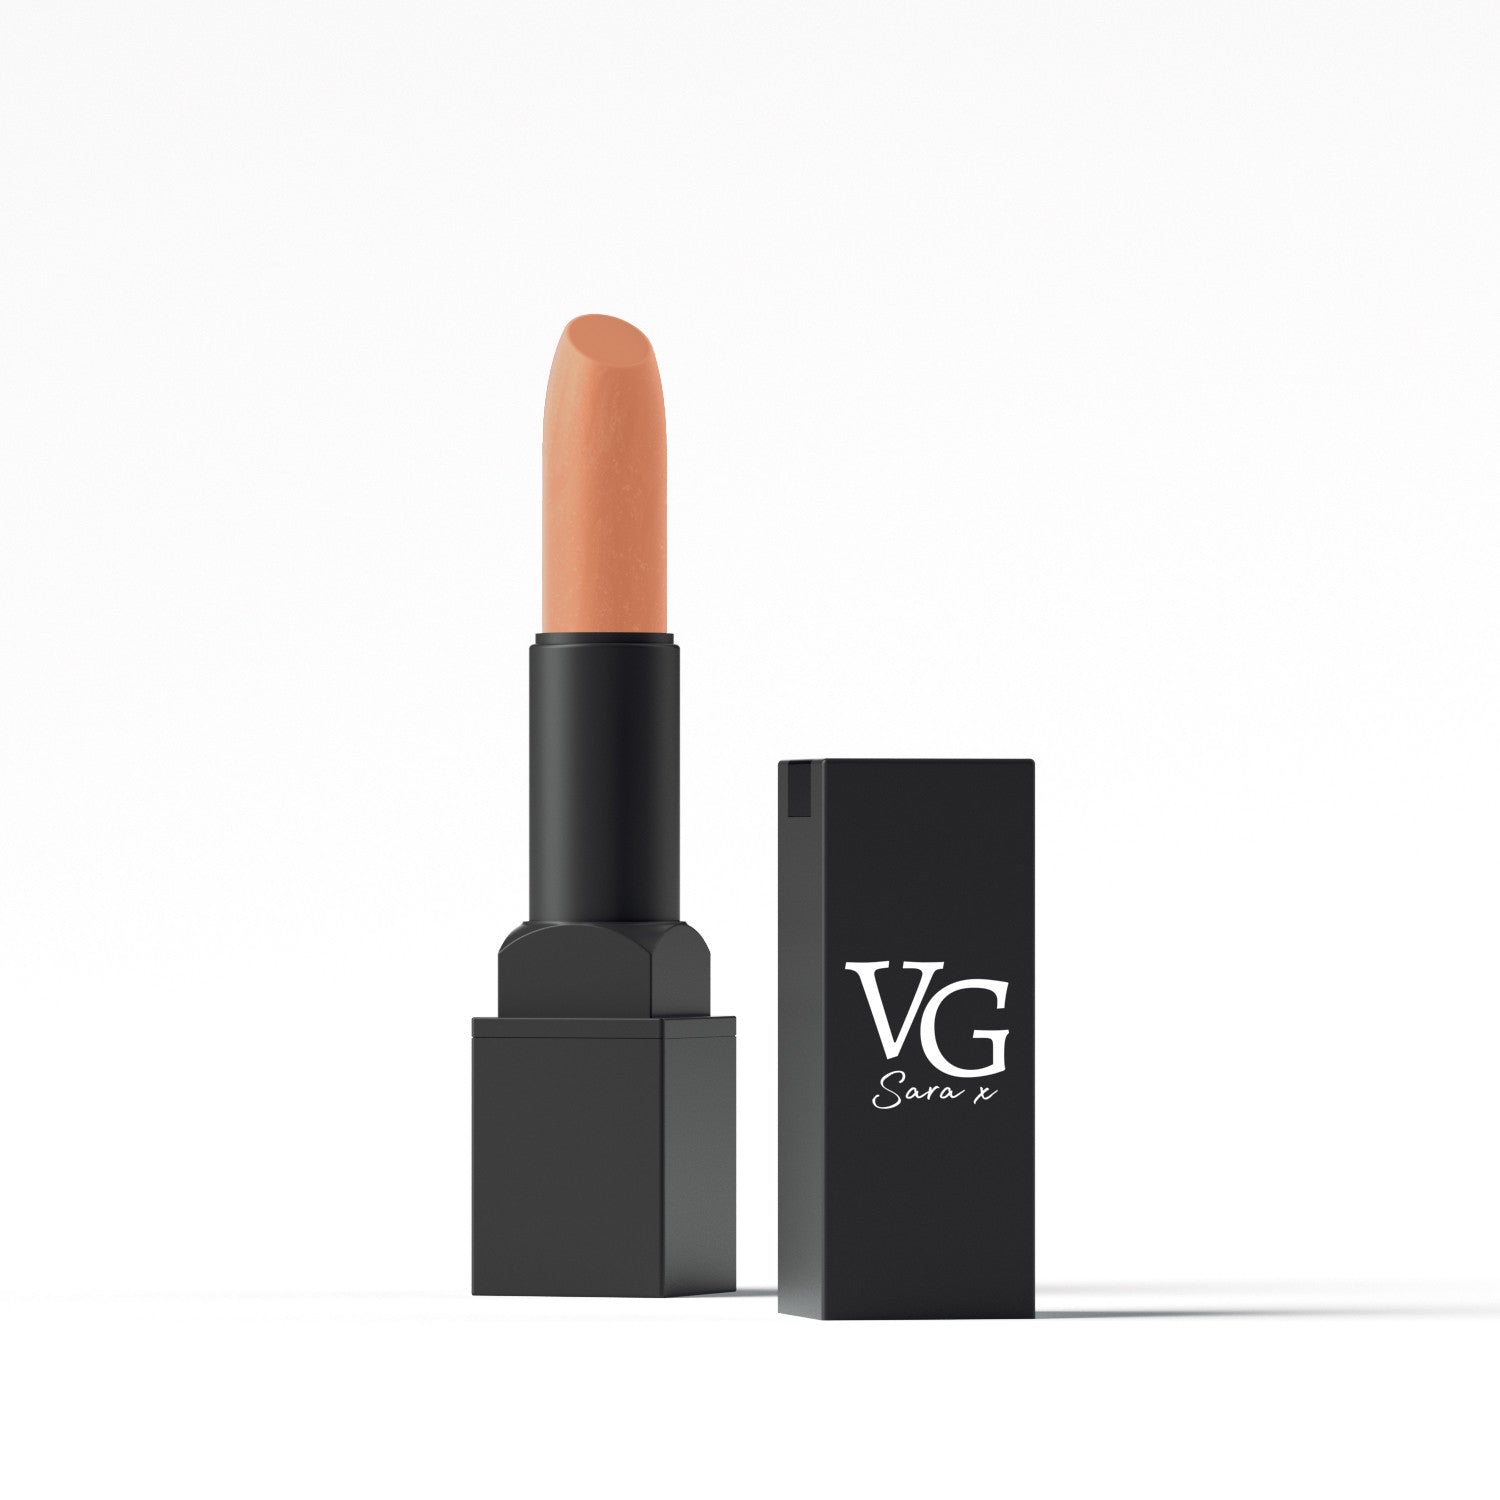 VG Cosmetics long-lasting lipstick beside its close-up